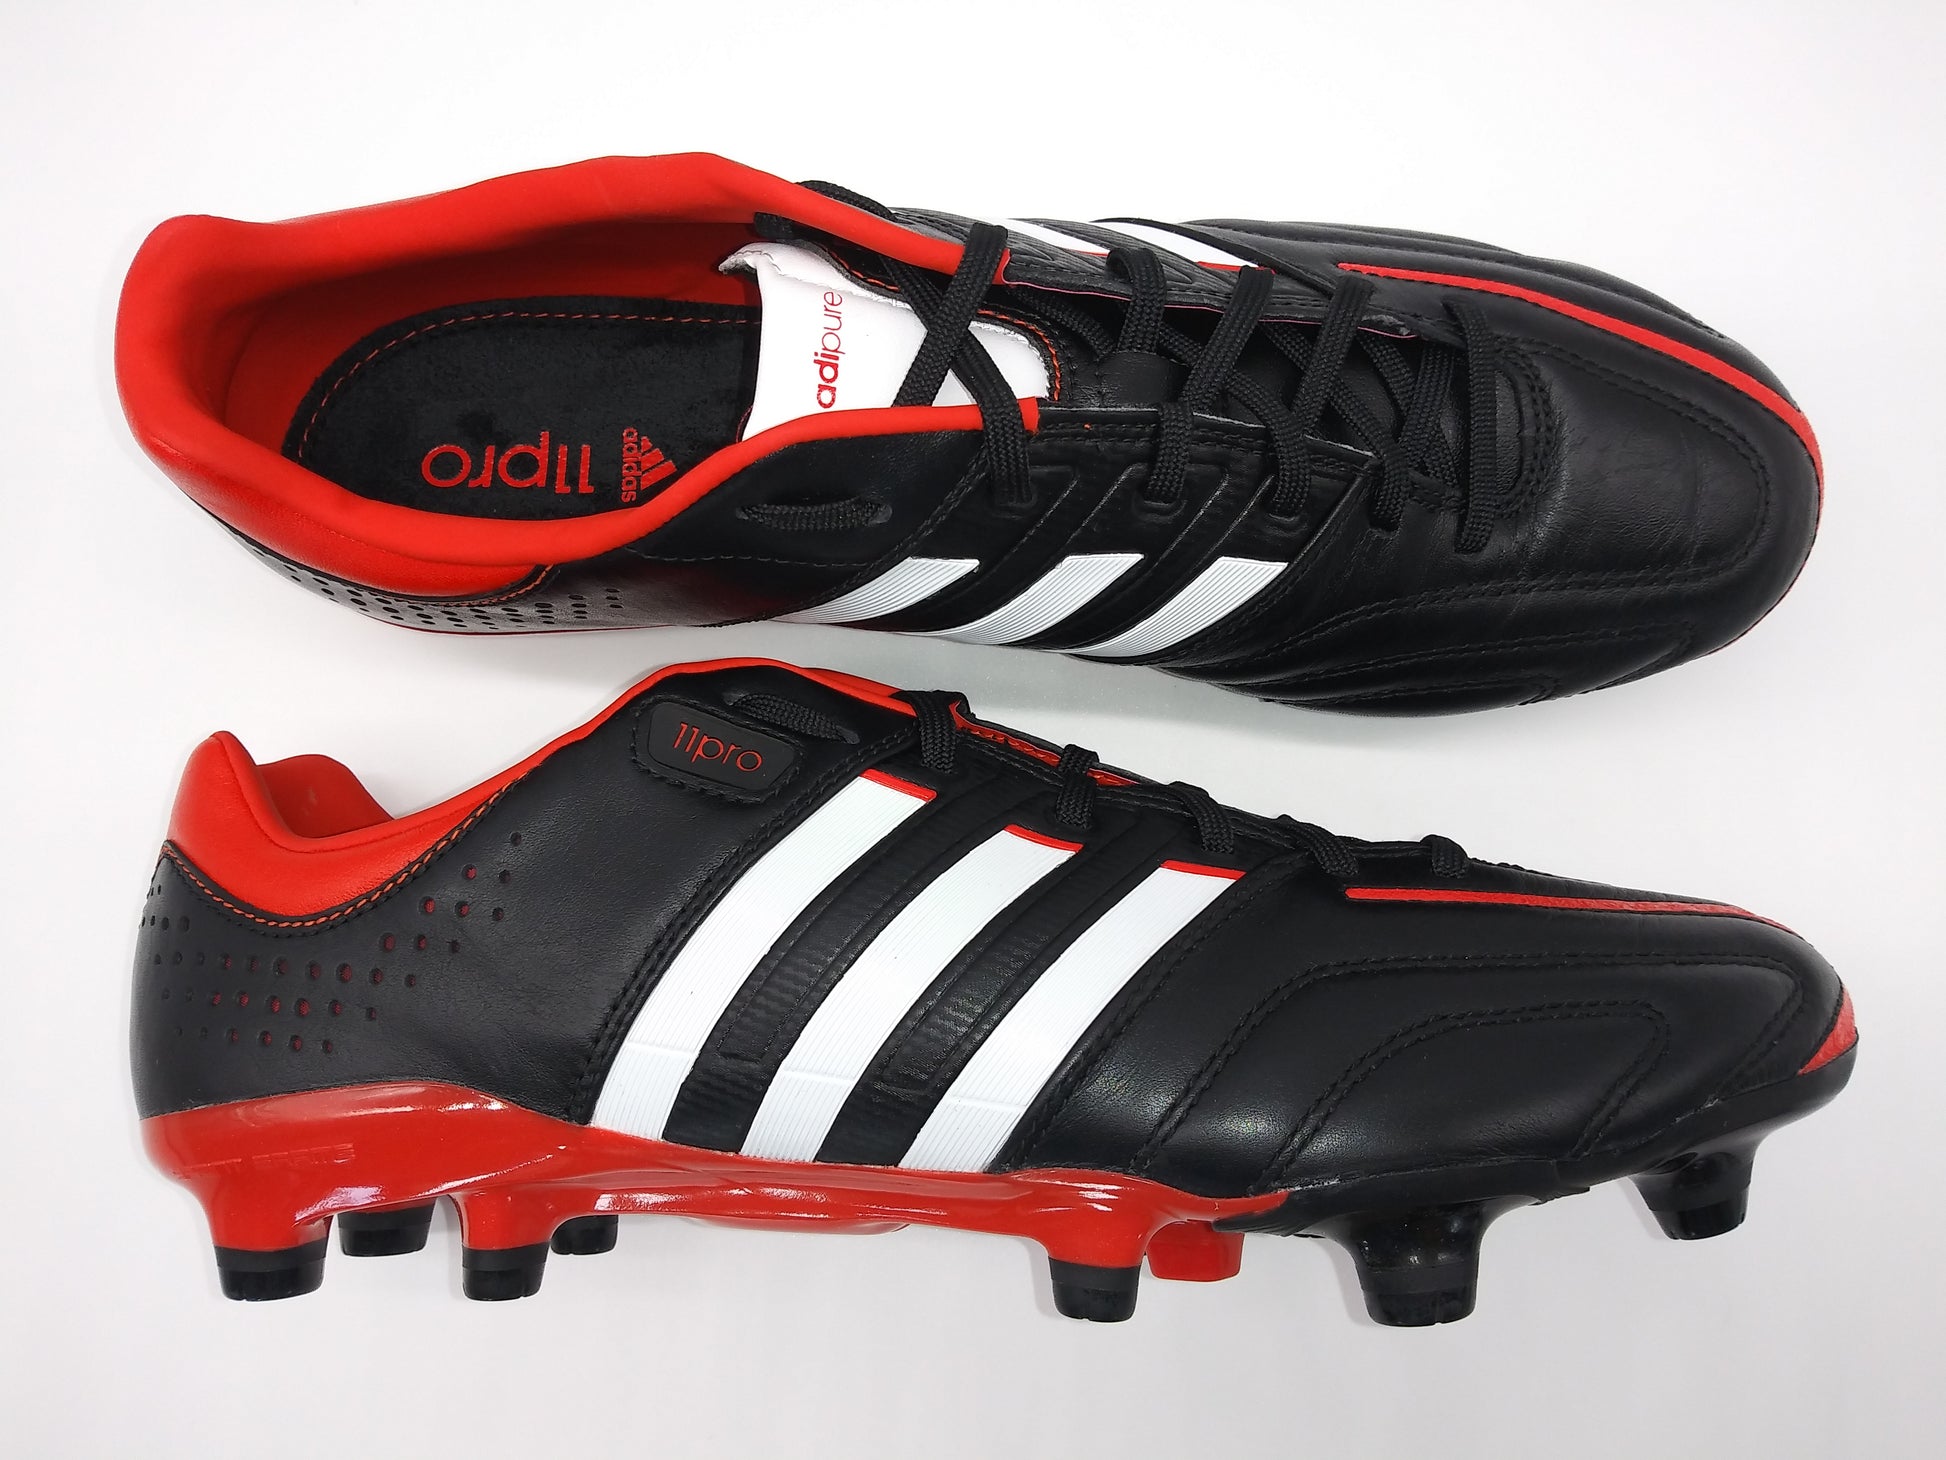 Adidas adipure 11Pro TRX Black Red Villegas Footwear